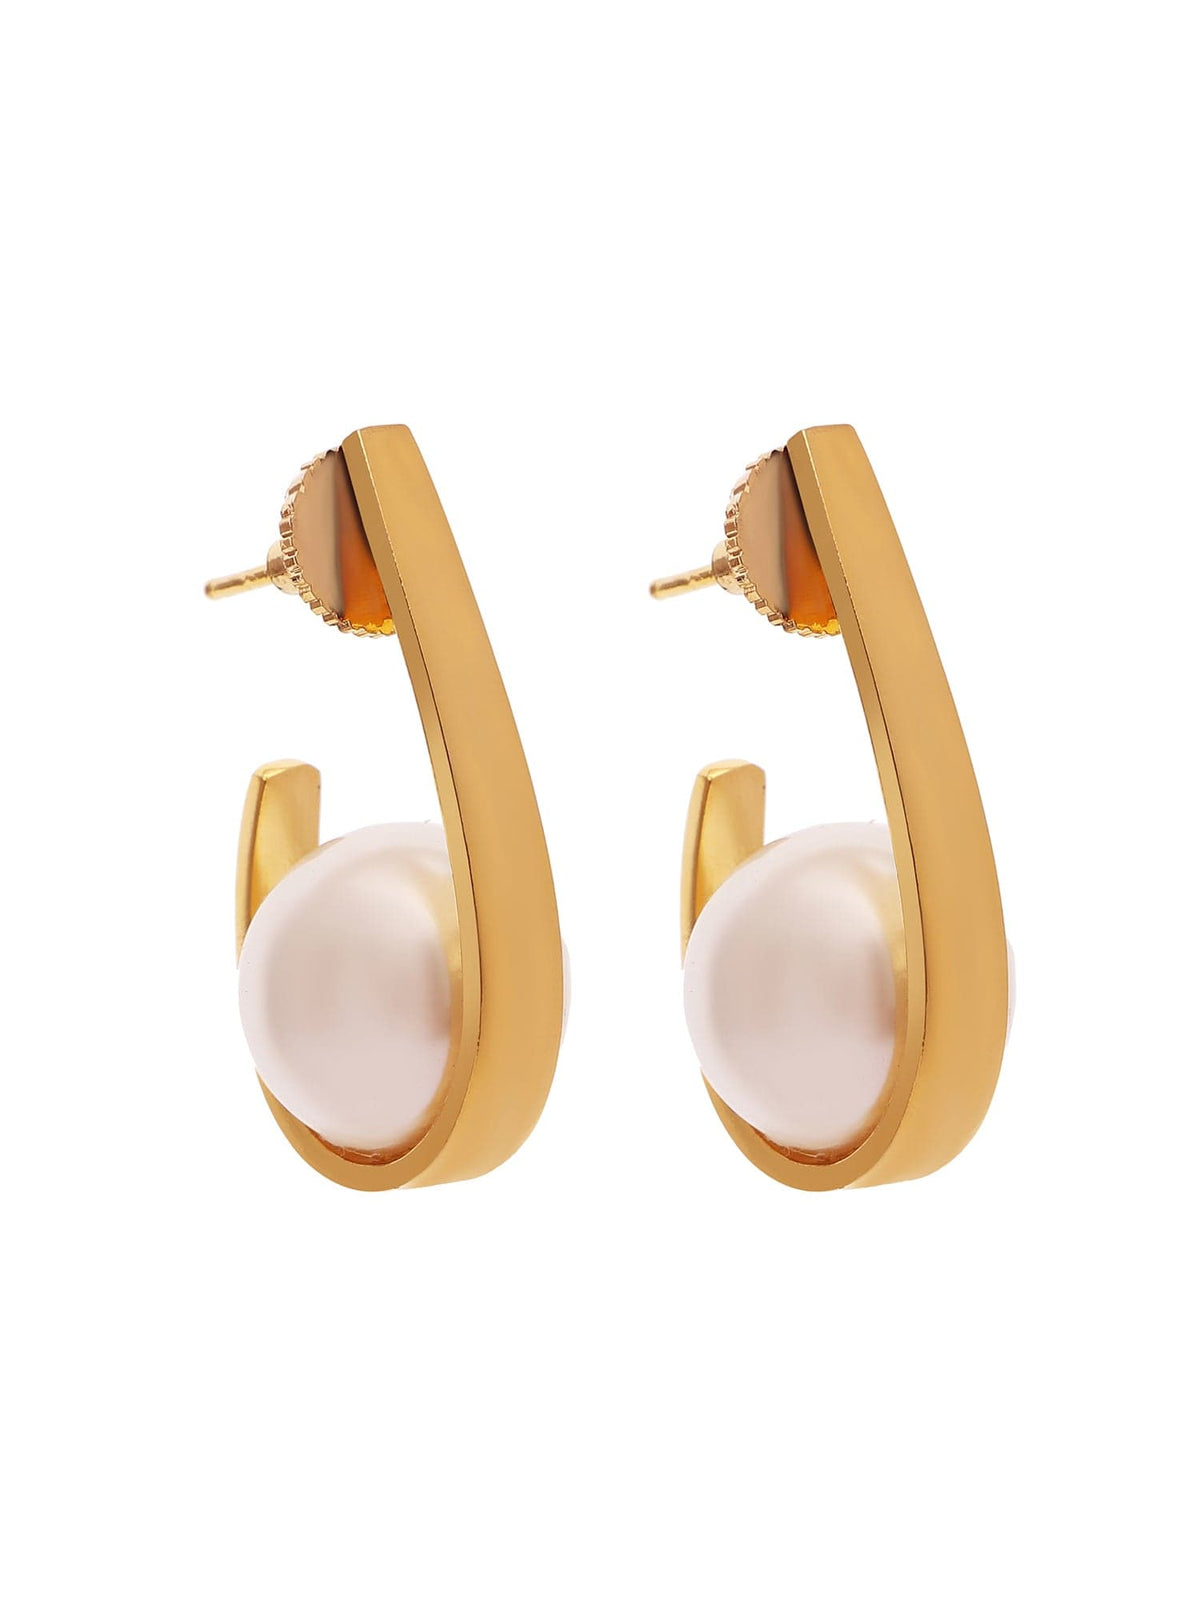 Stella pearl earrings